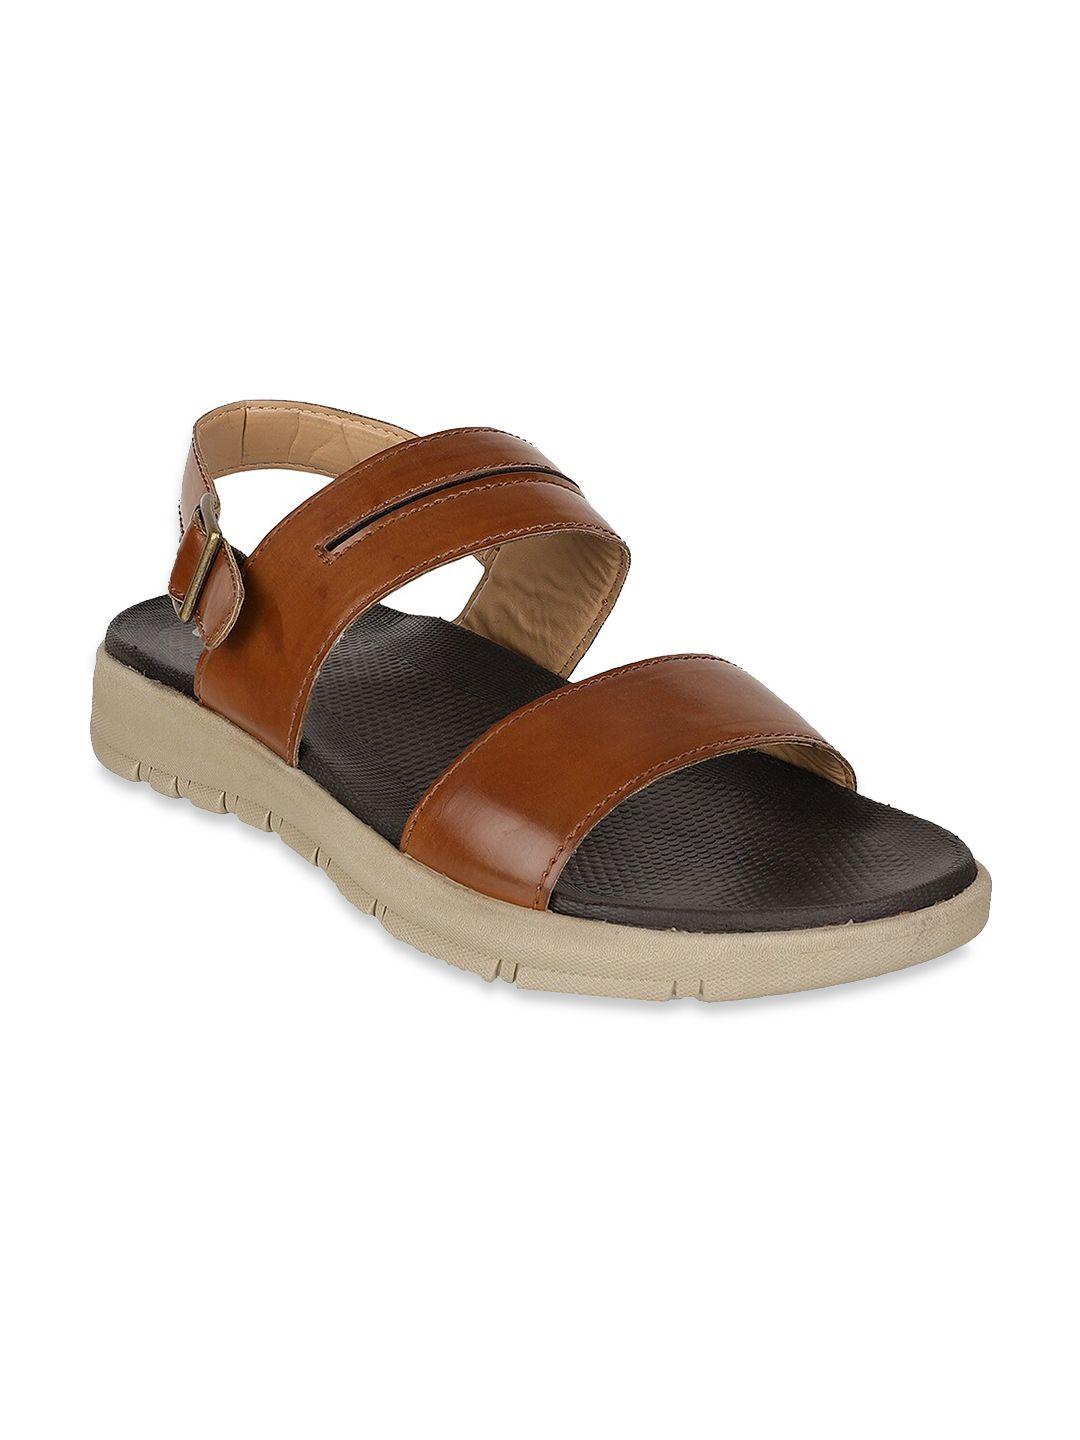 carlton-london-men-tan-synthetic-comfort-sandals